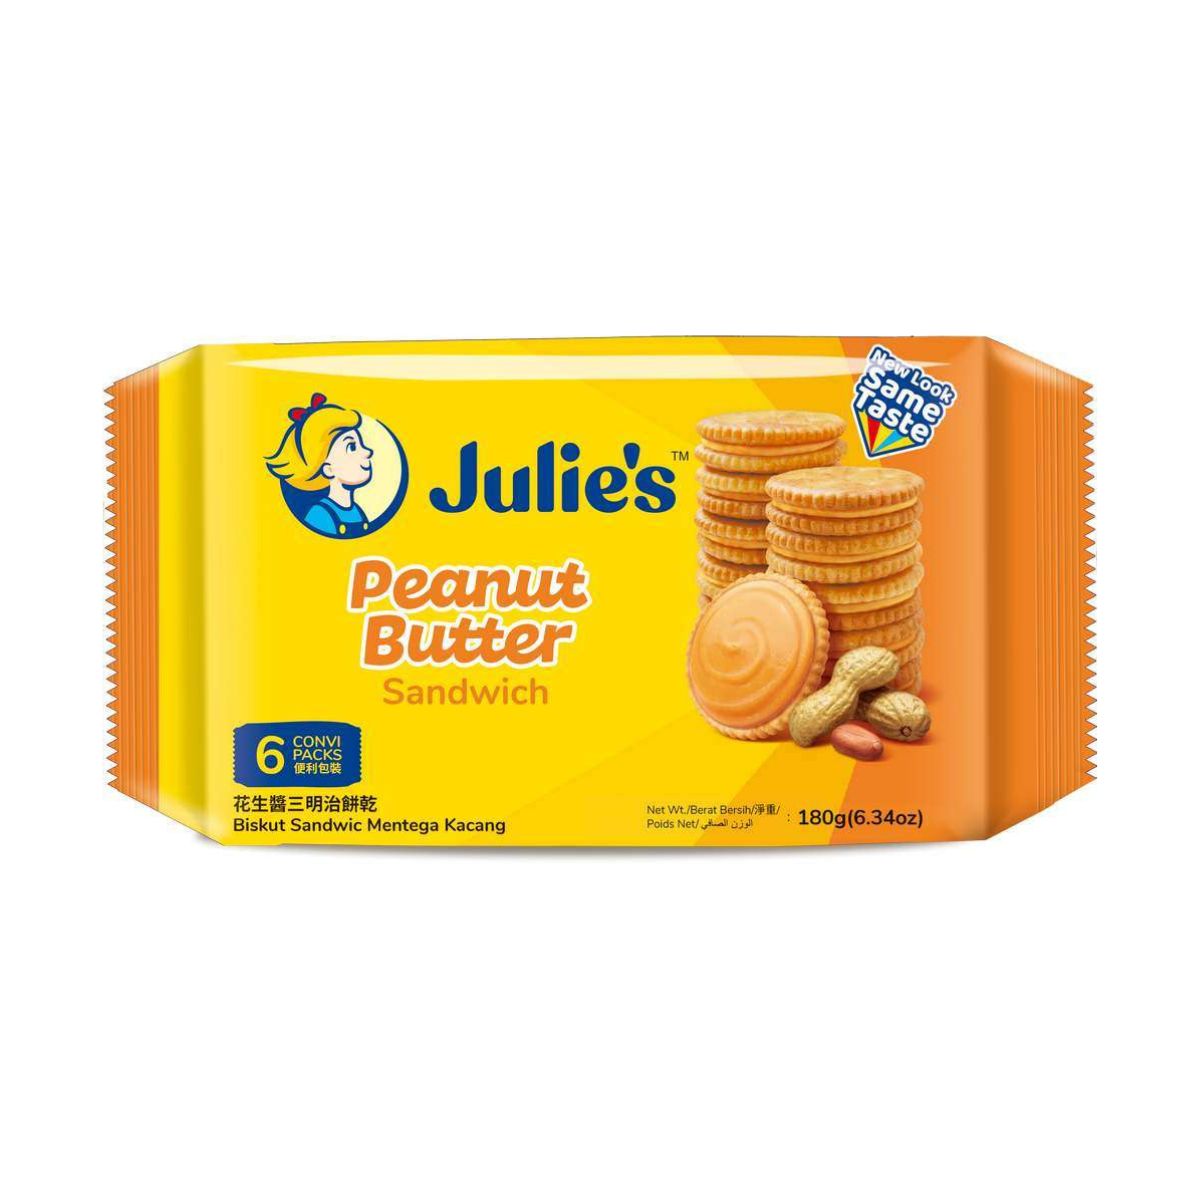 Julie's Peanut Butter Sandwich - 6 Convi Packs - 180g